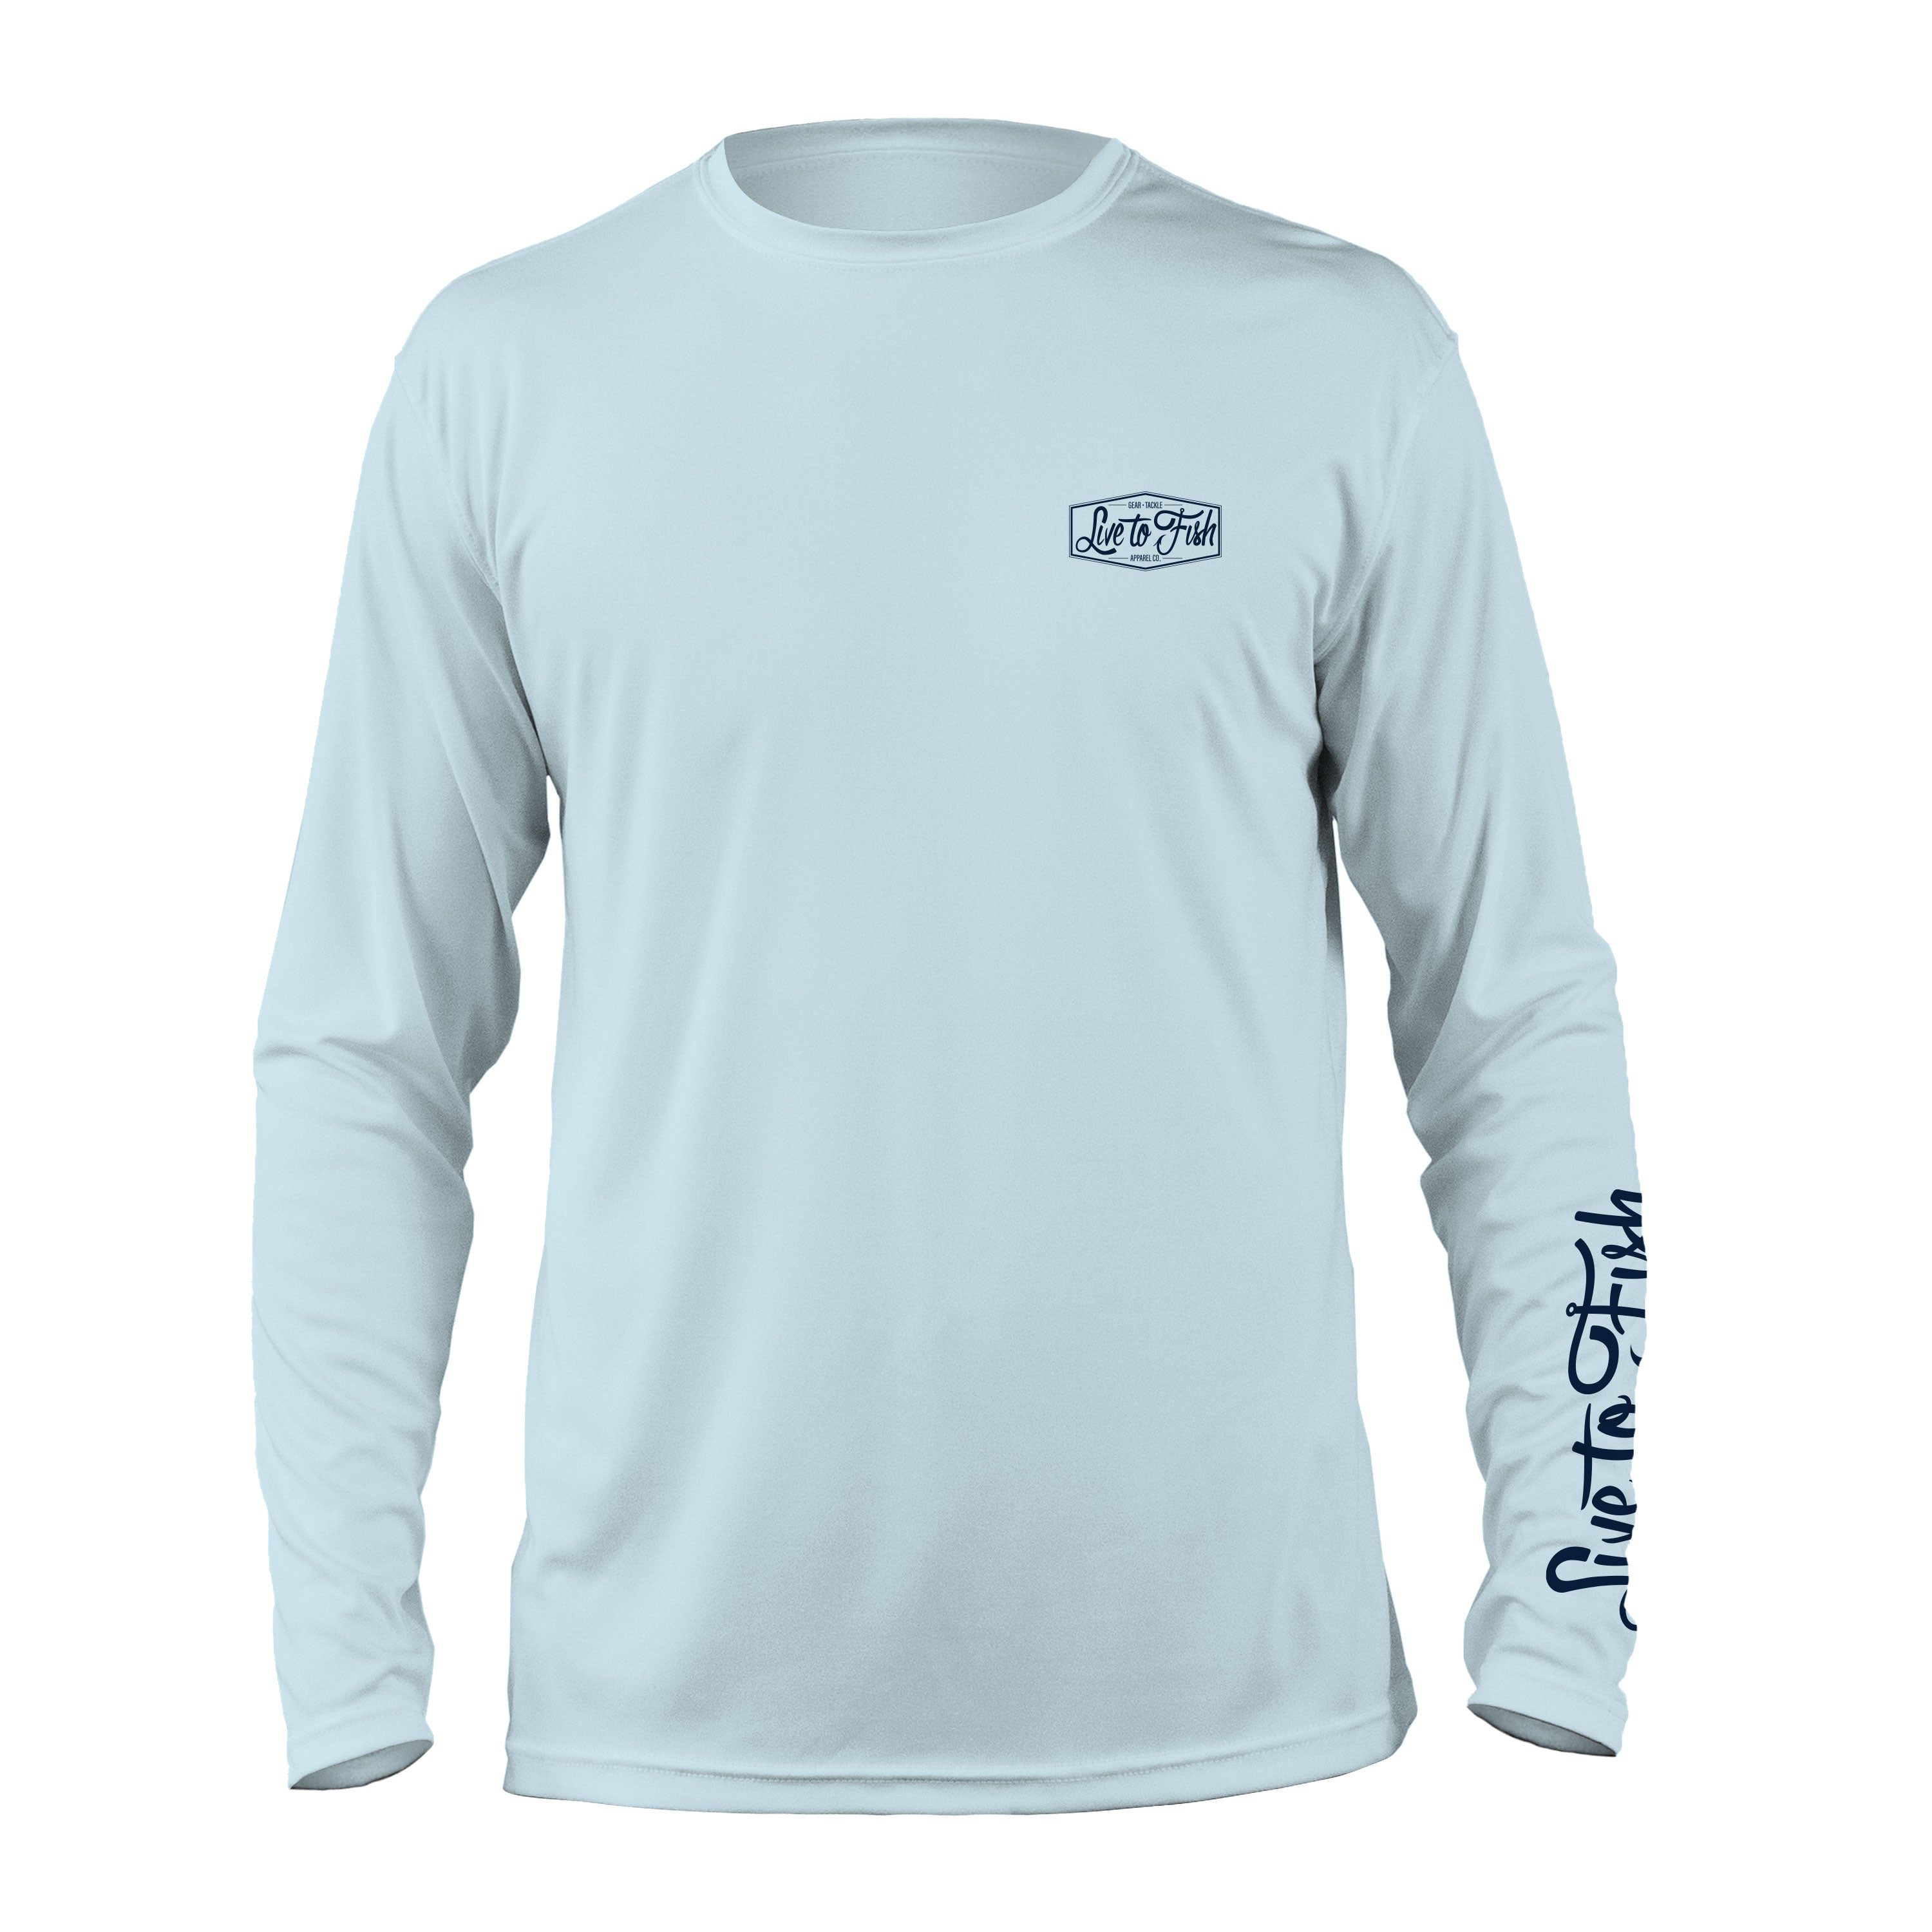 Florida marlins arched logo slub shirt, hoodie, sweater, long sleeve and  tank top